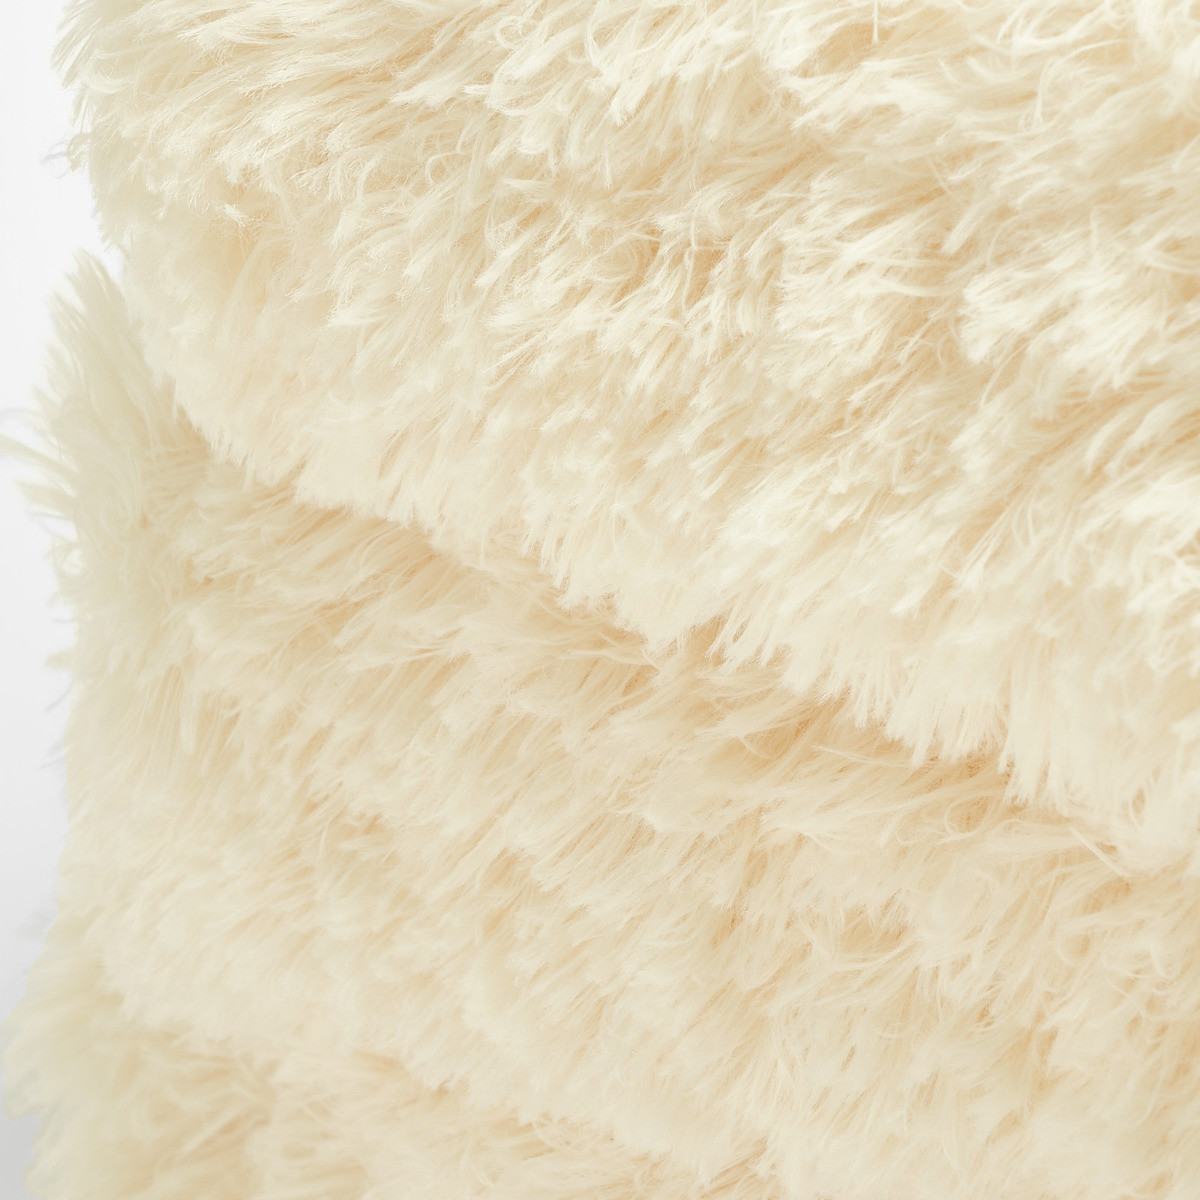 Sienna Fluffy Throw, 150 x 200cm - Cream>